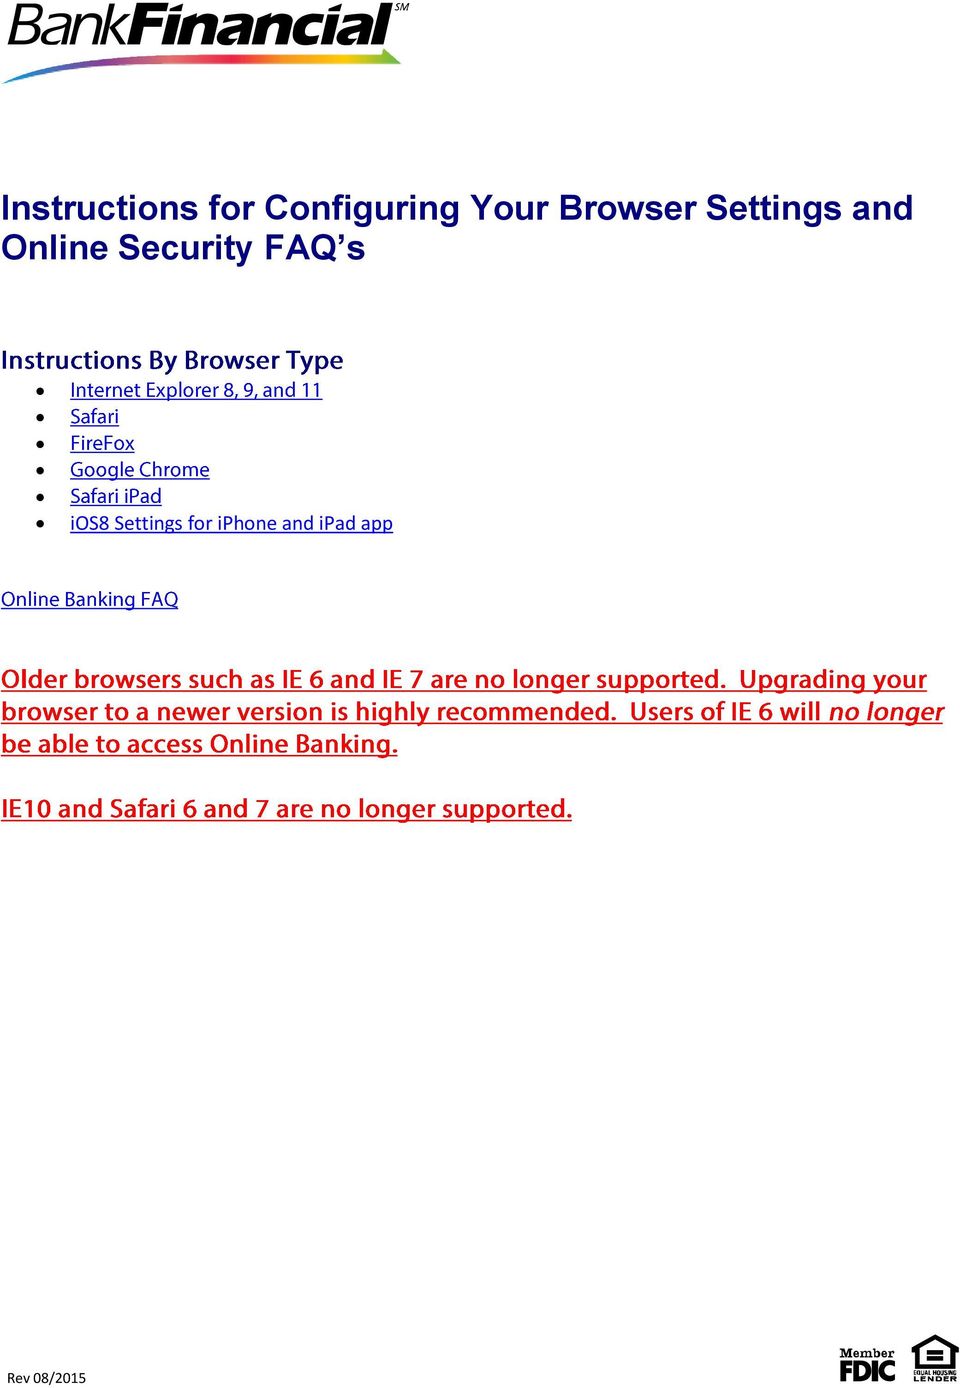 Online Security FAQ s ios8